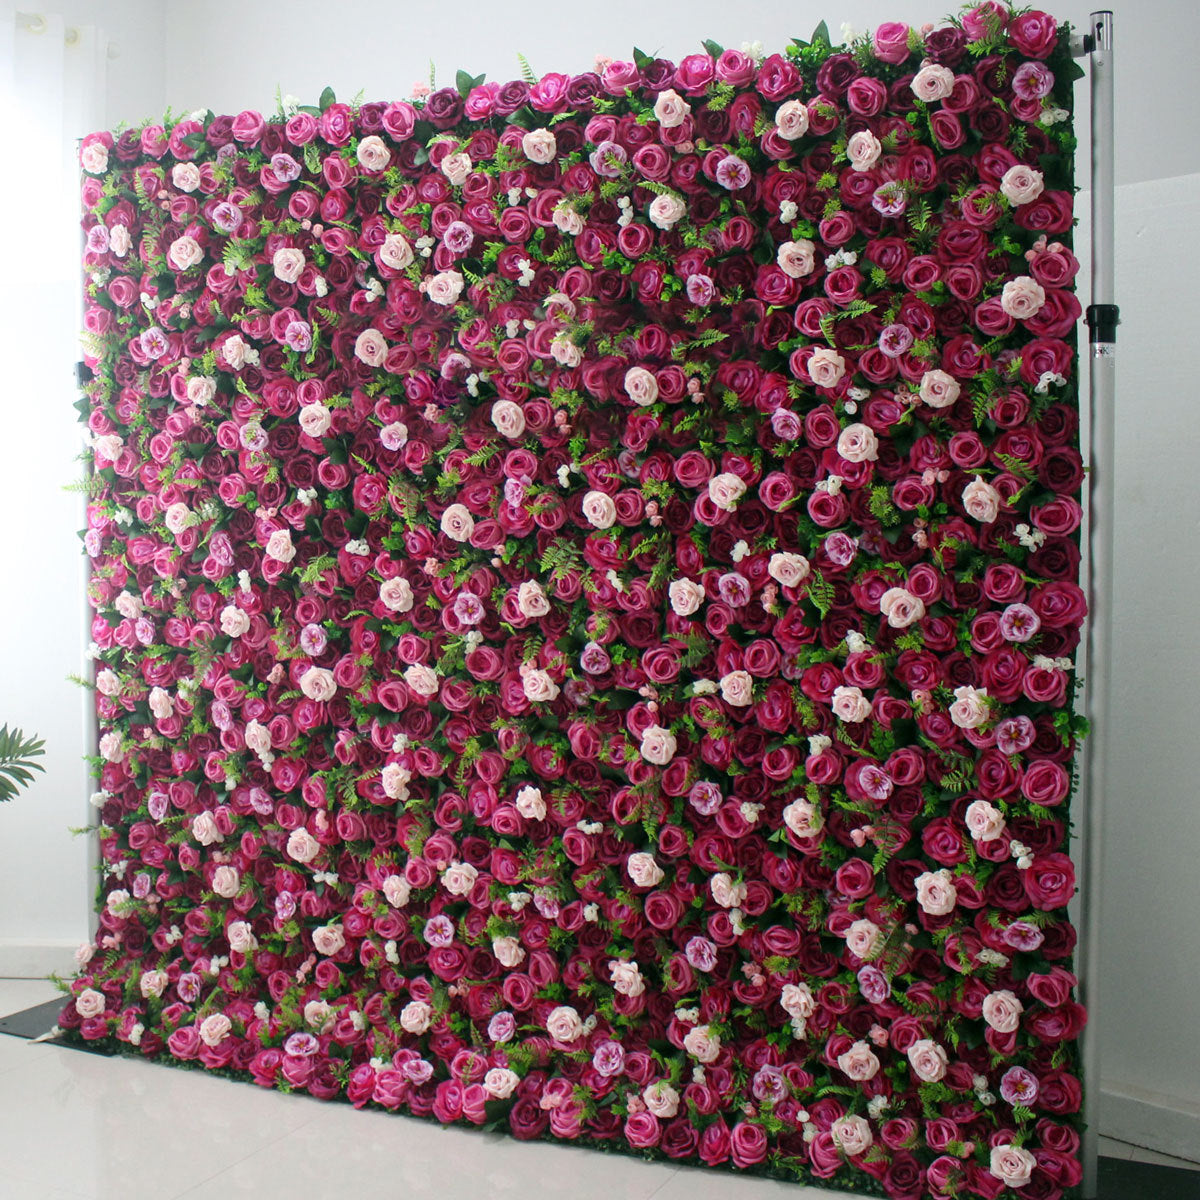 3D Artificial Flower Wall Arrangement Wedding Party Birthday Backdrop Decor HQ1177